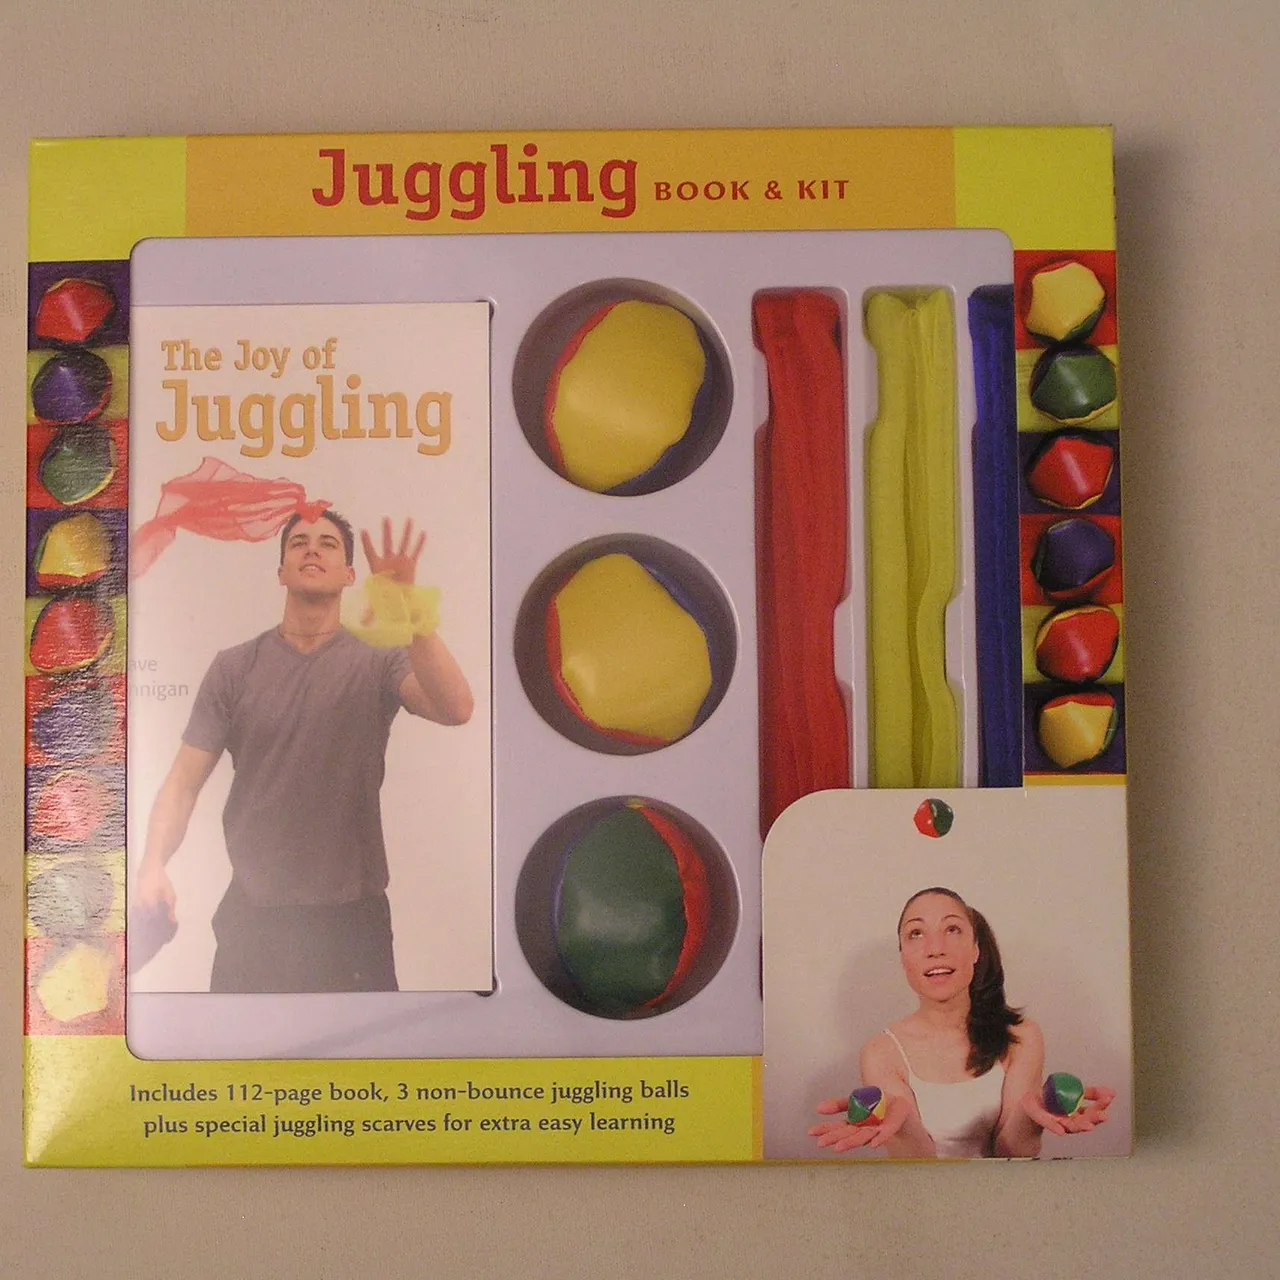 Juggling kit photo 1